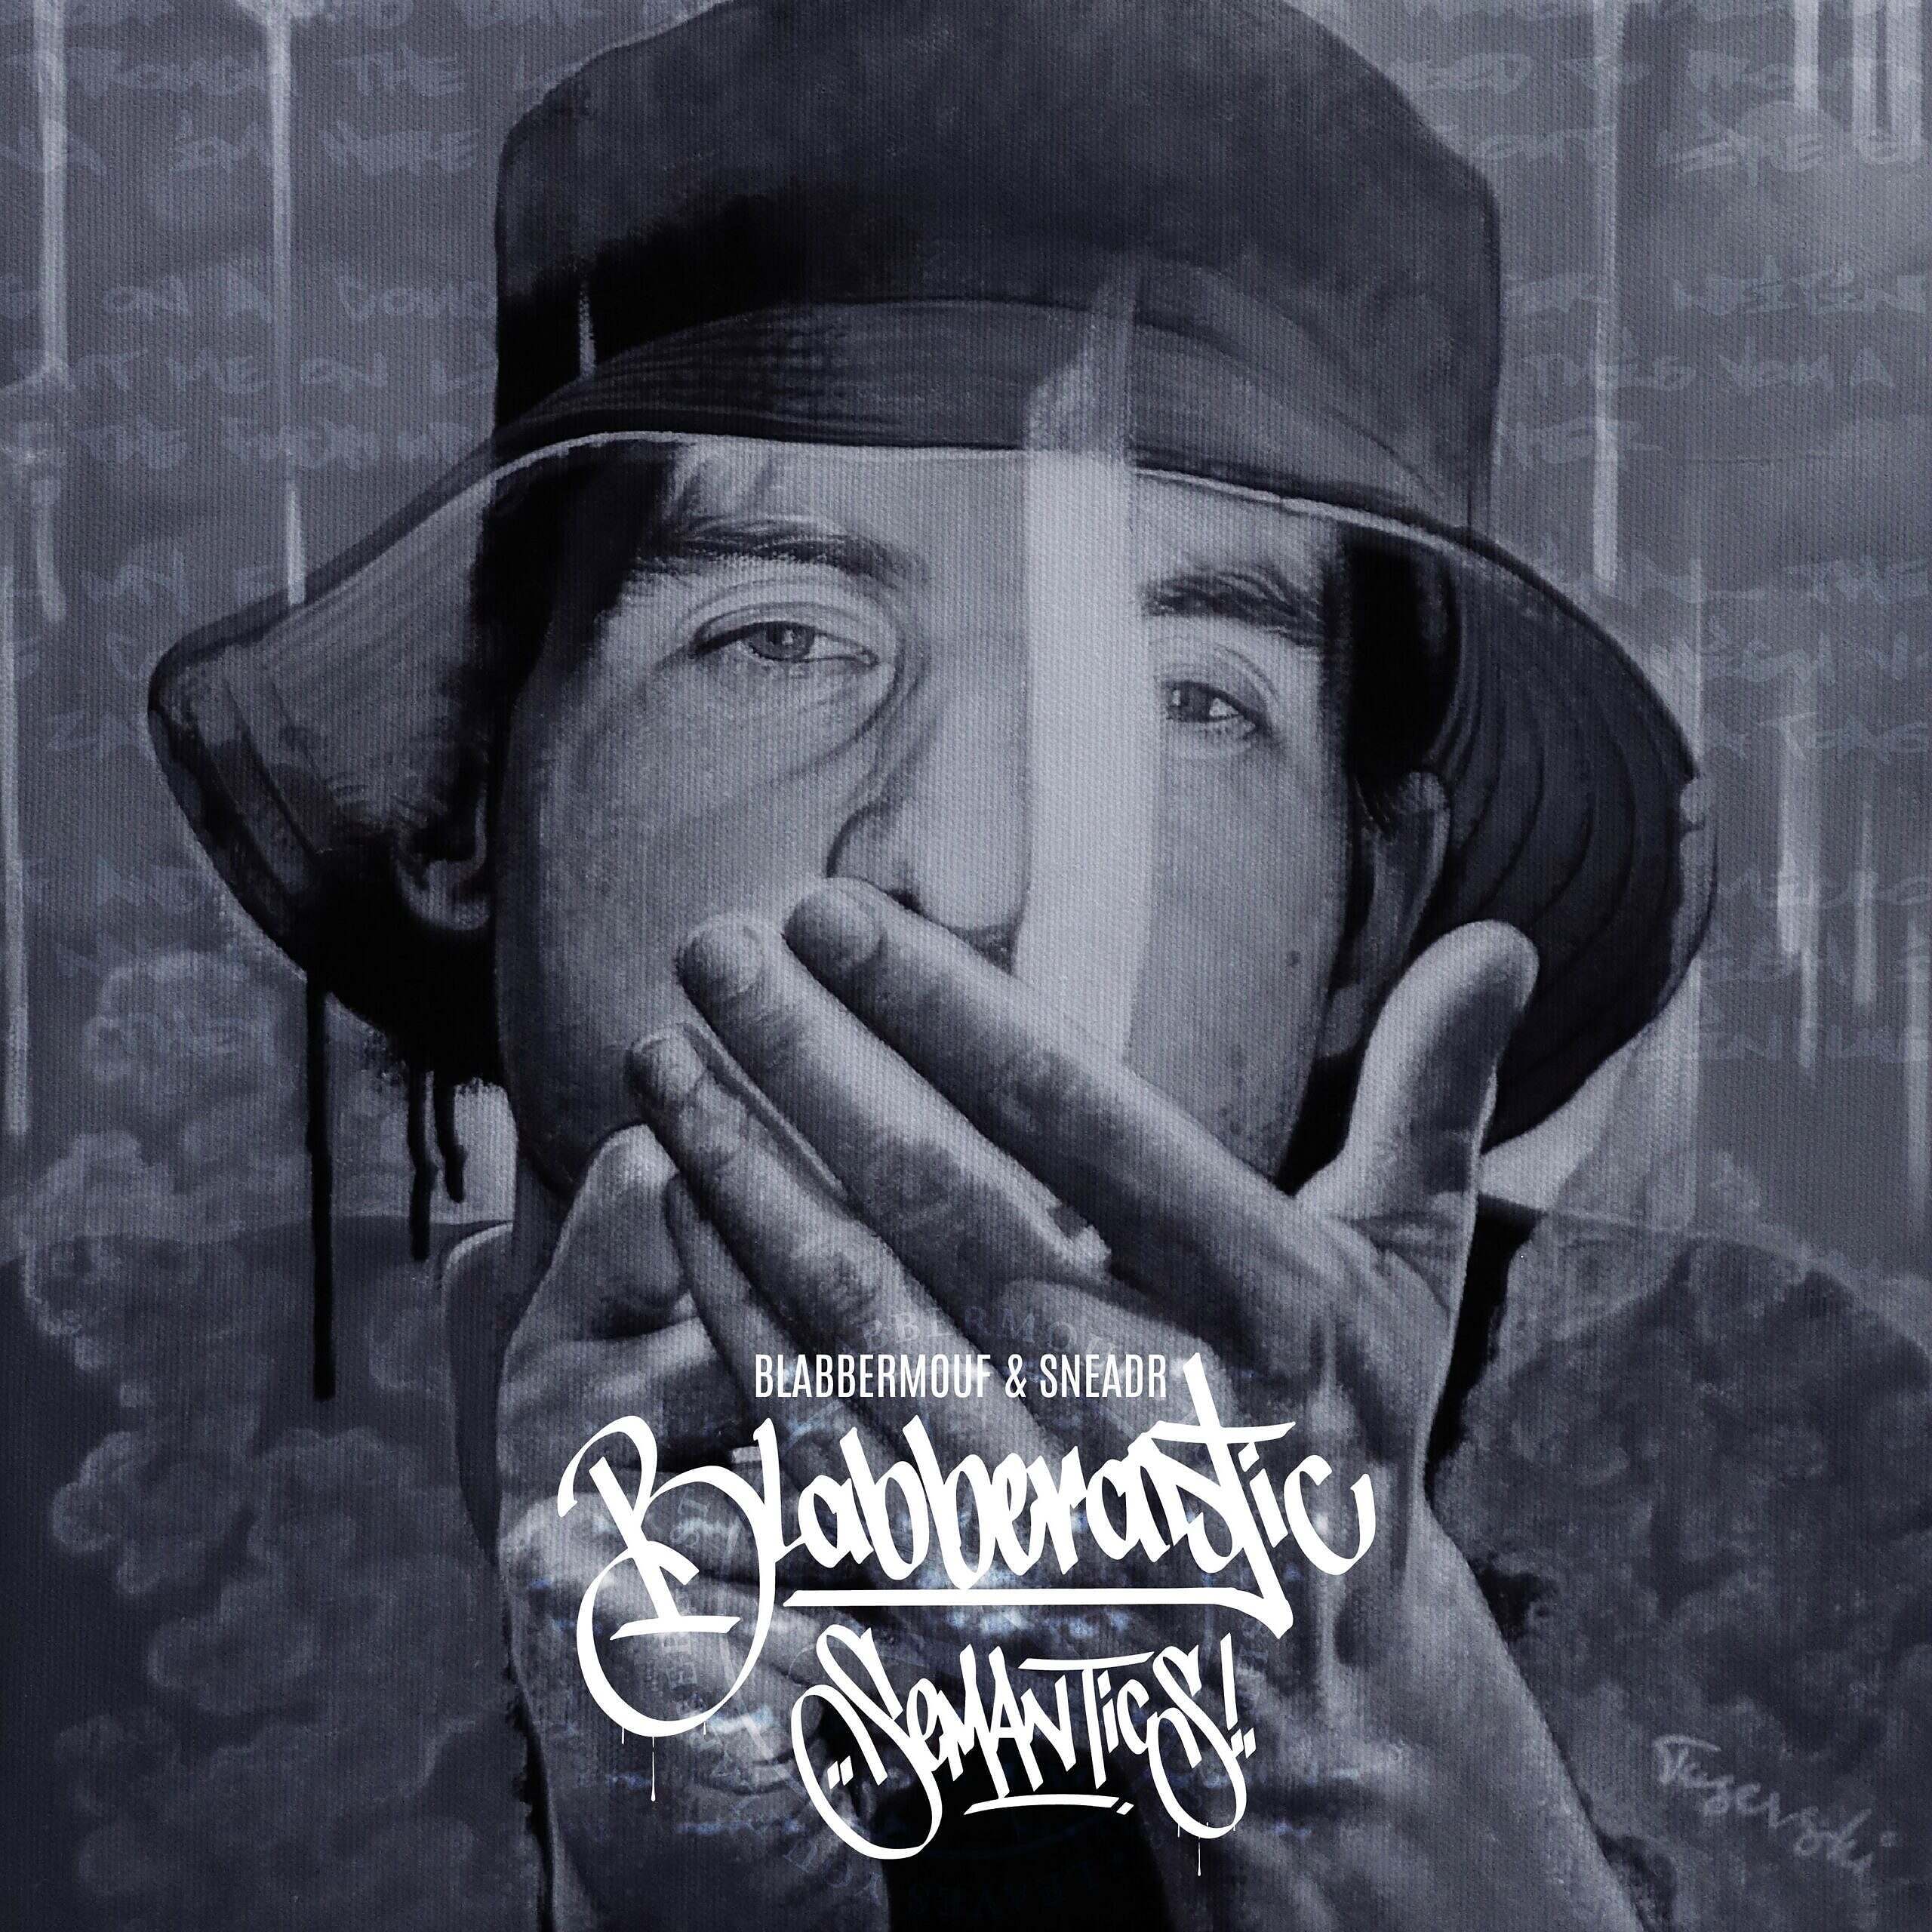 BlabberMouf & Sneadr Drop 'Blabberastic Semantics' Album + "The House/Bring That Raw/Killa Sound" Video